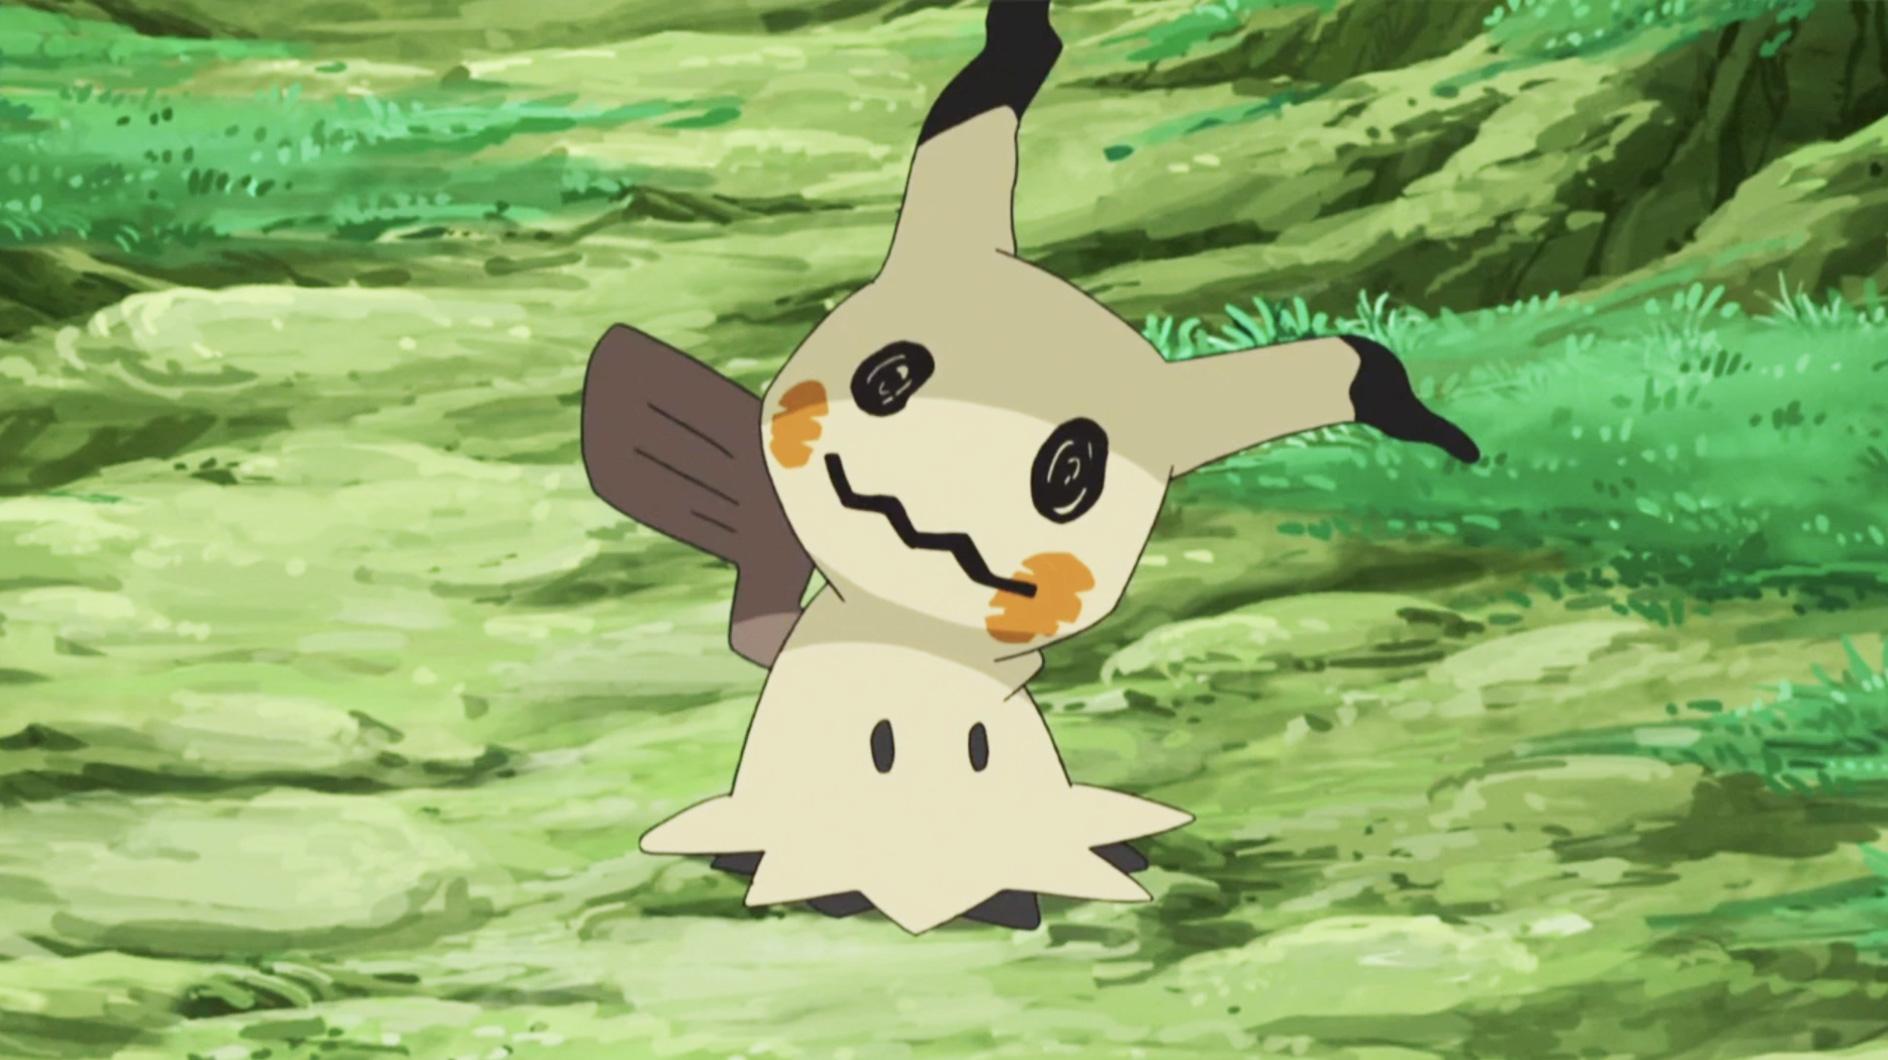 Screenshot of Pokemon Mimikyu from Sun & Moon anime.